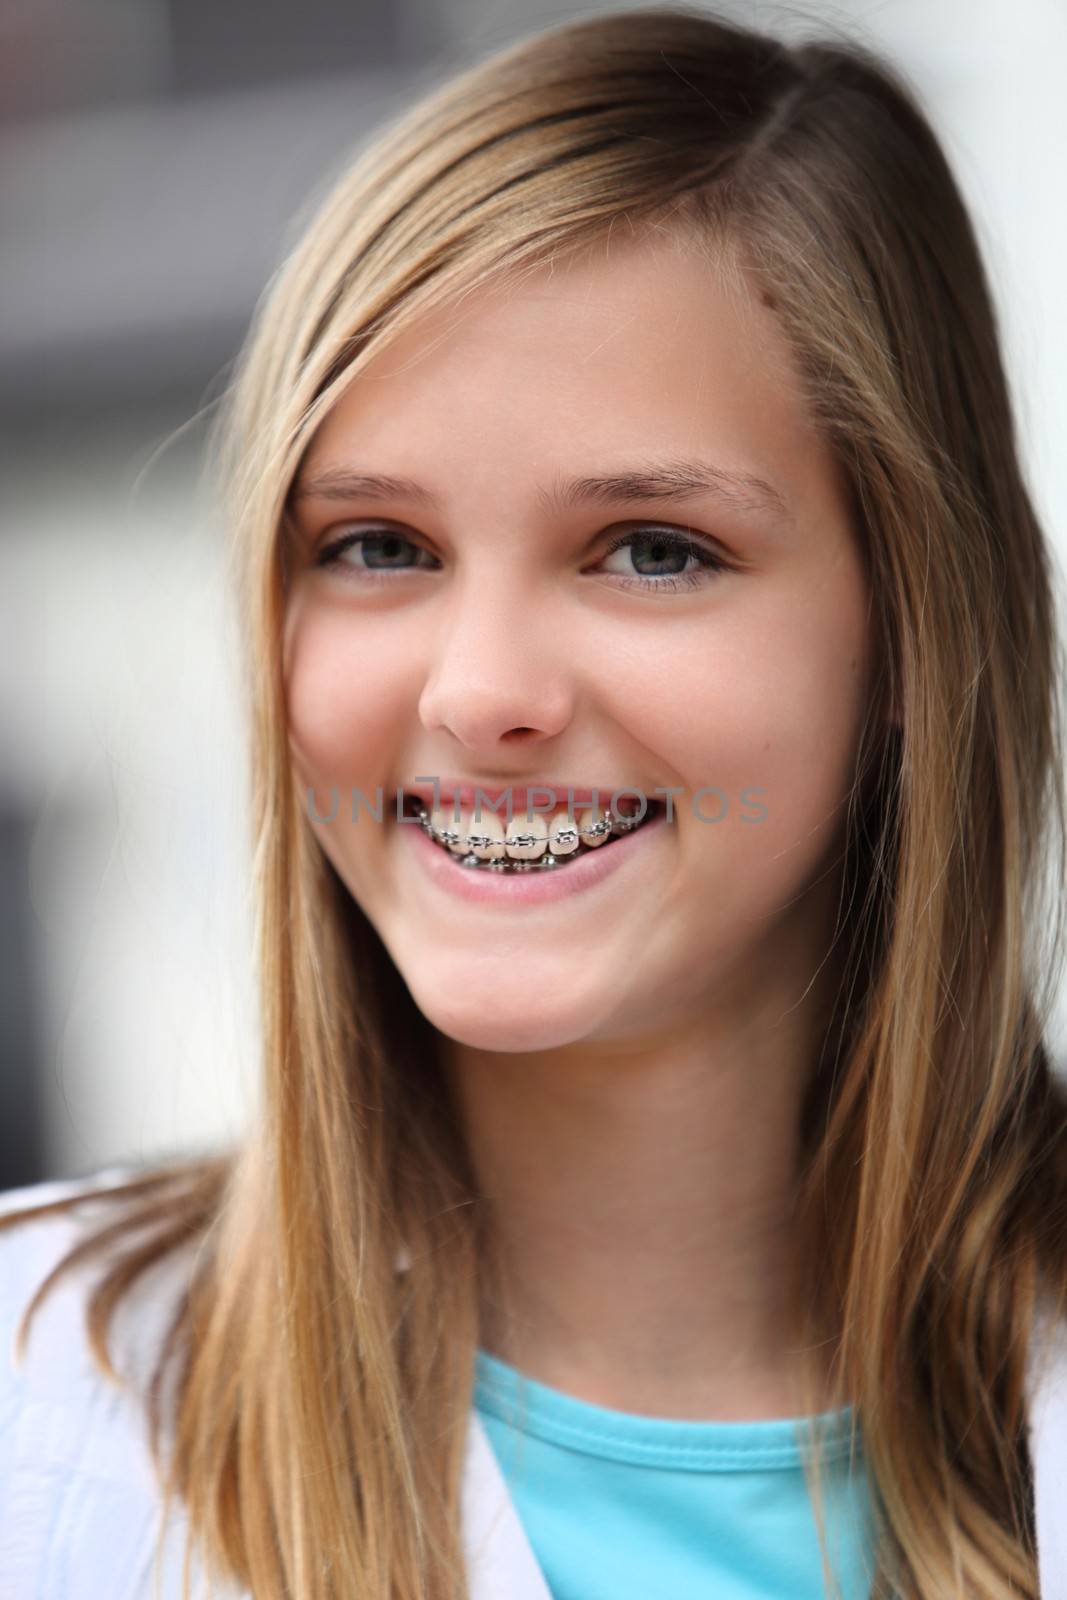 Smiling teenage girl wearing dental braces by Farina6000